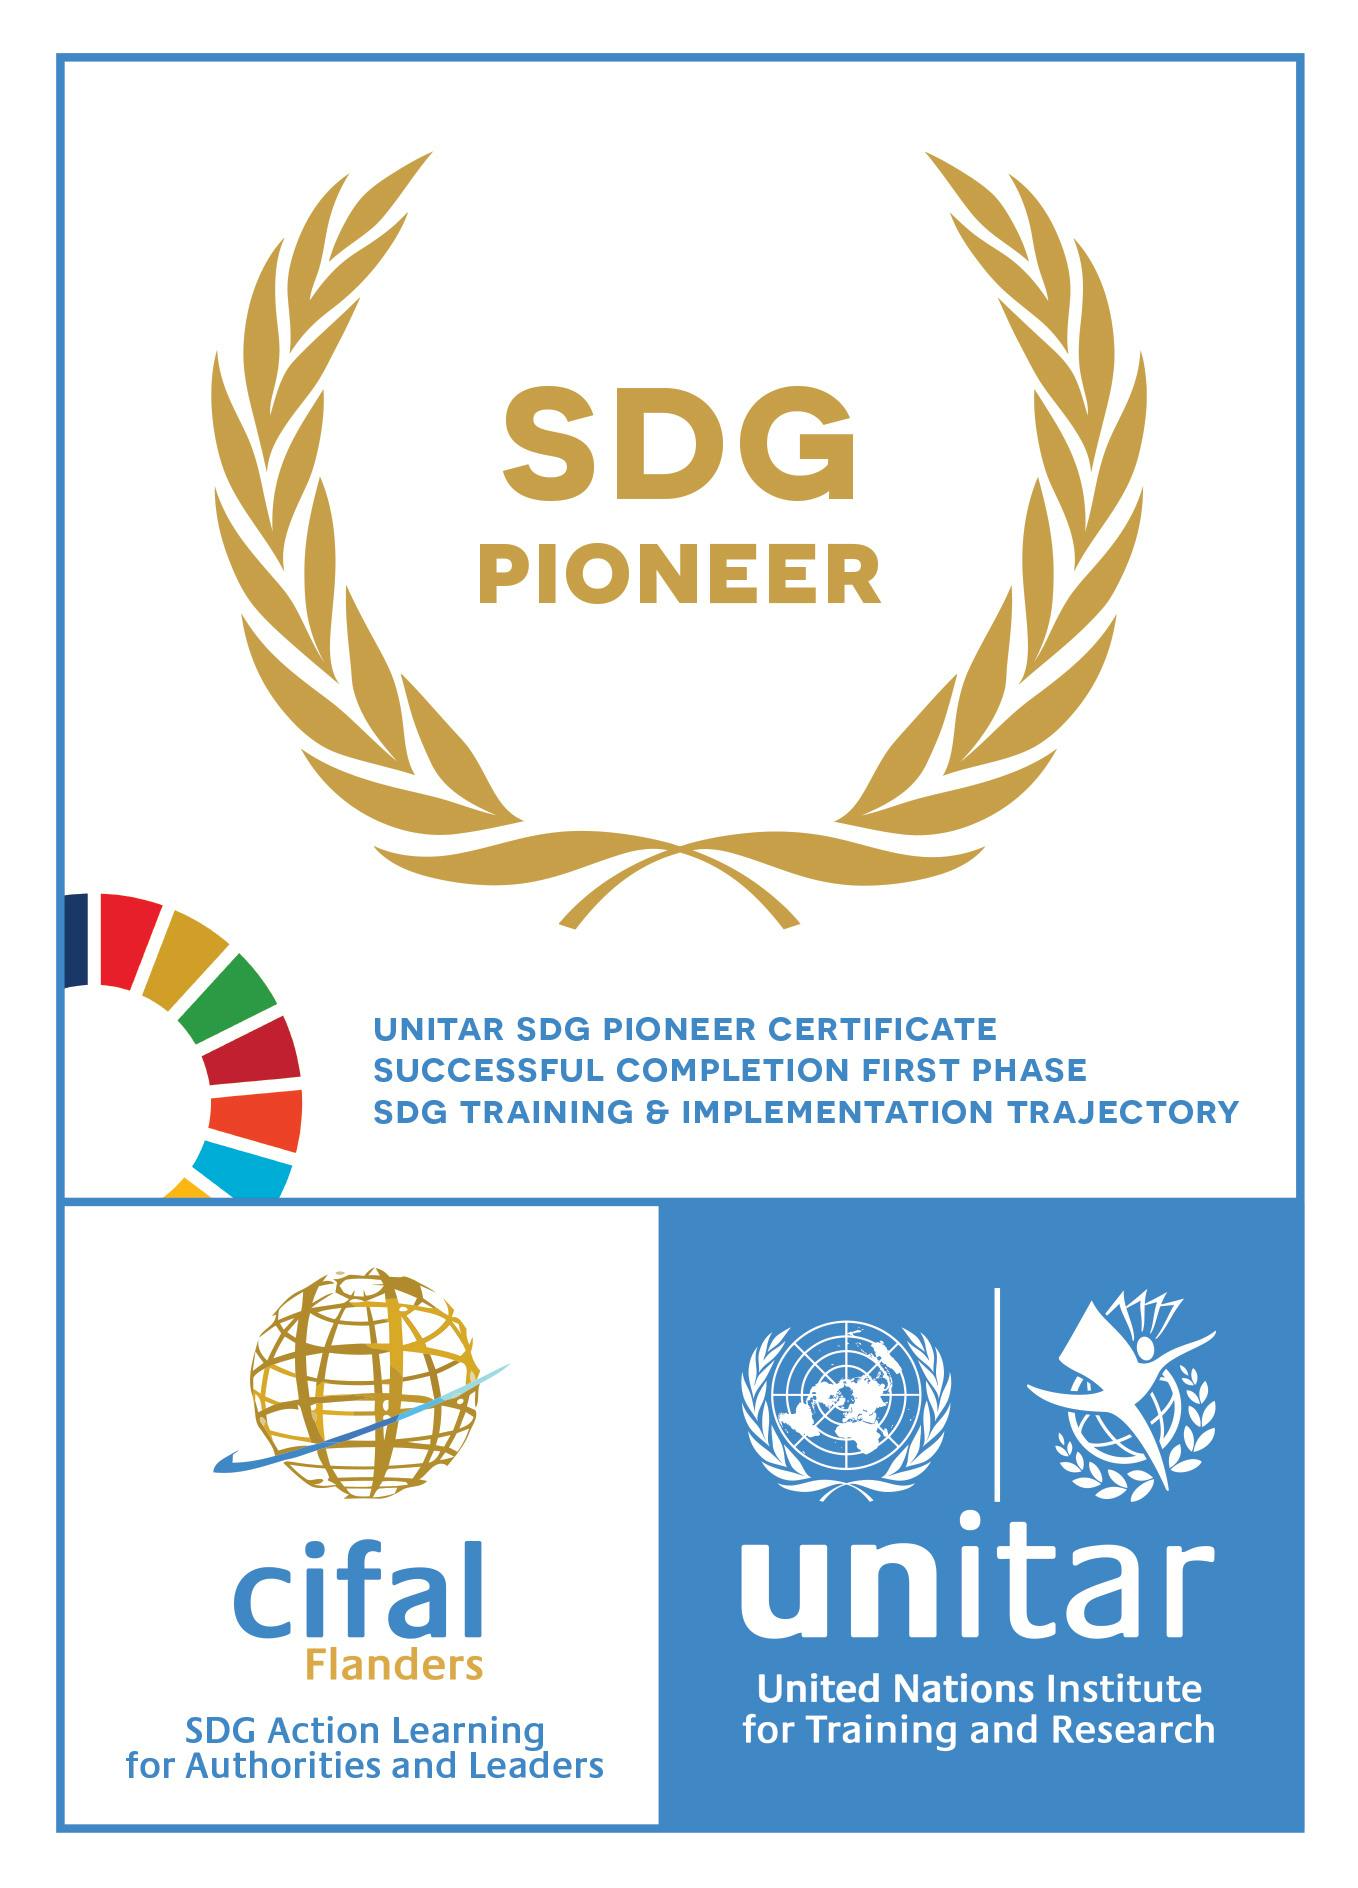 imec awarded with SDG Pioneer certificate